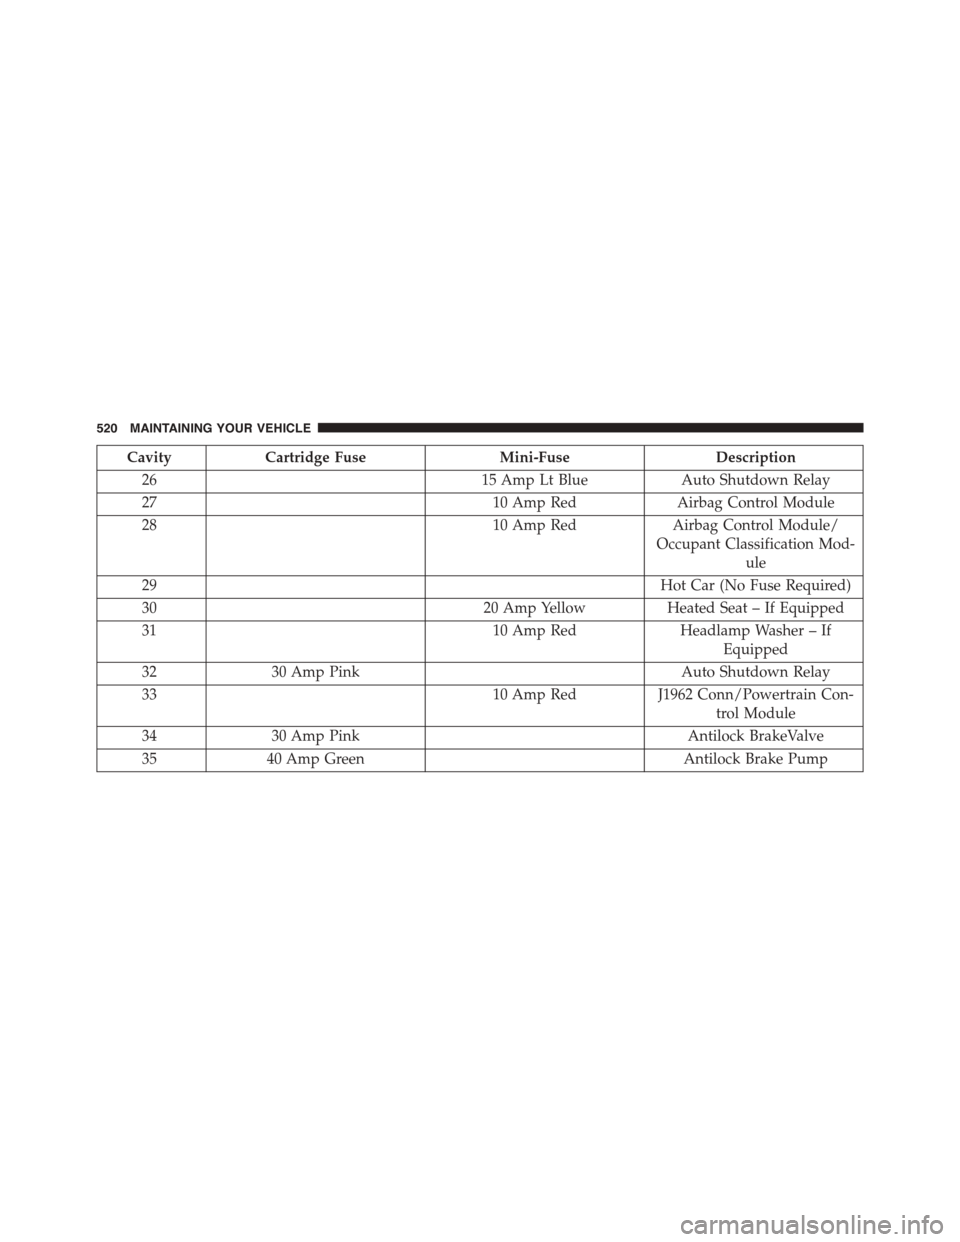 JEEP PATRIOT 2015 1.G Owners Manual CavityCartridge FuseMini-FuseDescription
2615 Amp Lt BlueAuto Shutdown Relay
2710 Amp RedAirbag Control Module
2810 Amp RedAirbag Control Module/
Occupant Classification Mod-
ule
29Hot Car (No Fuse Re